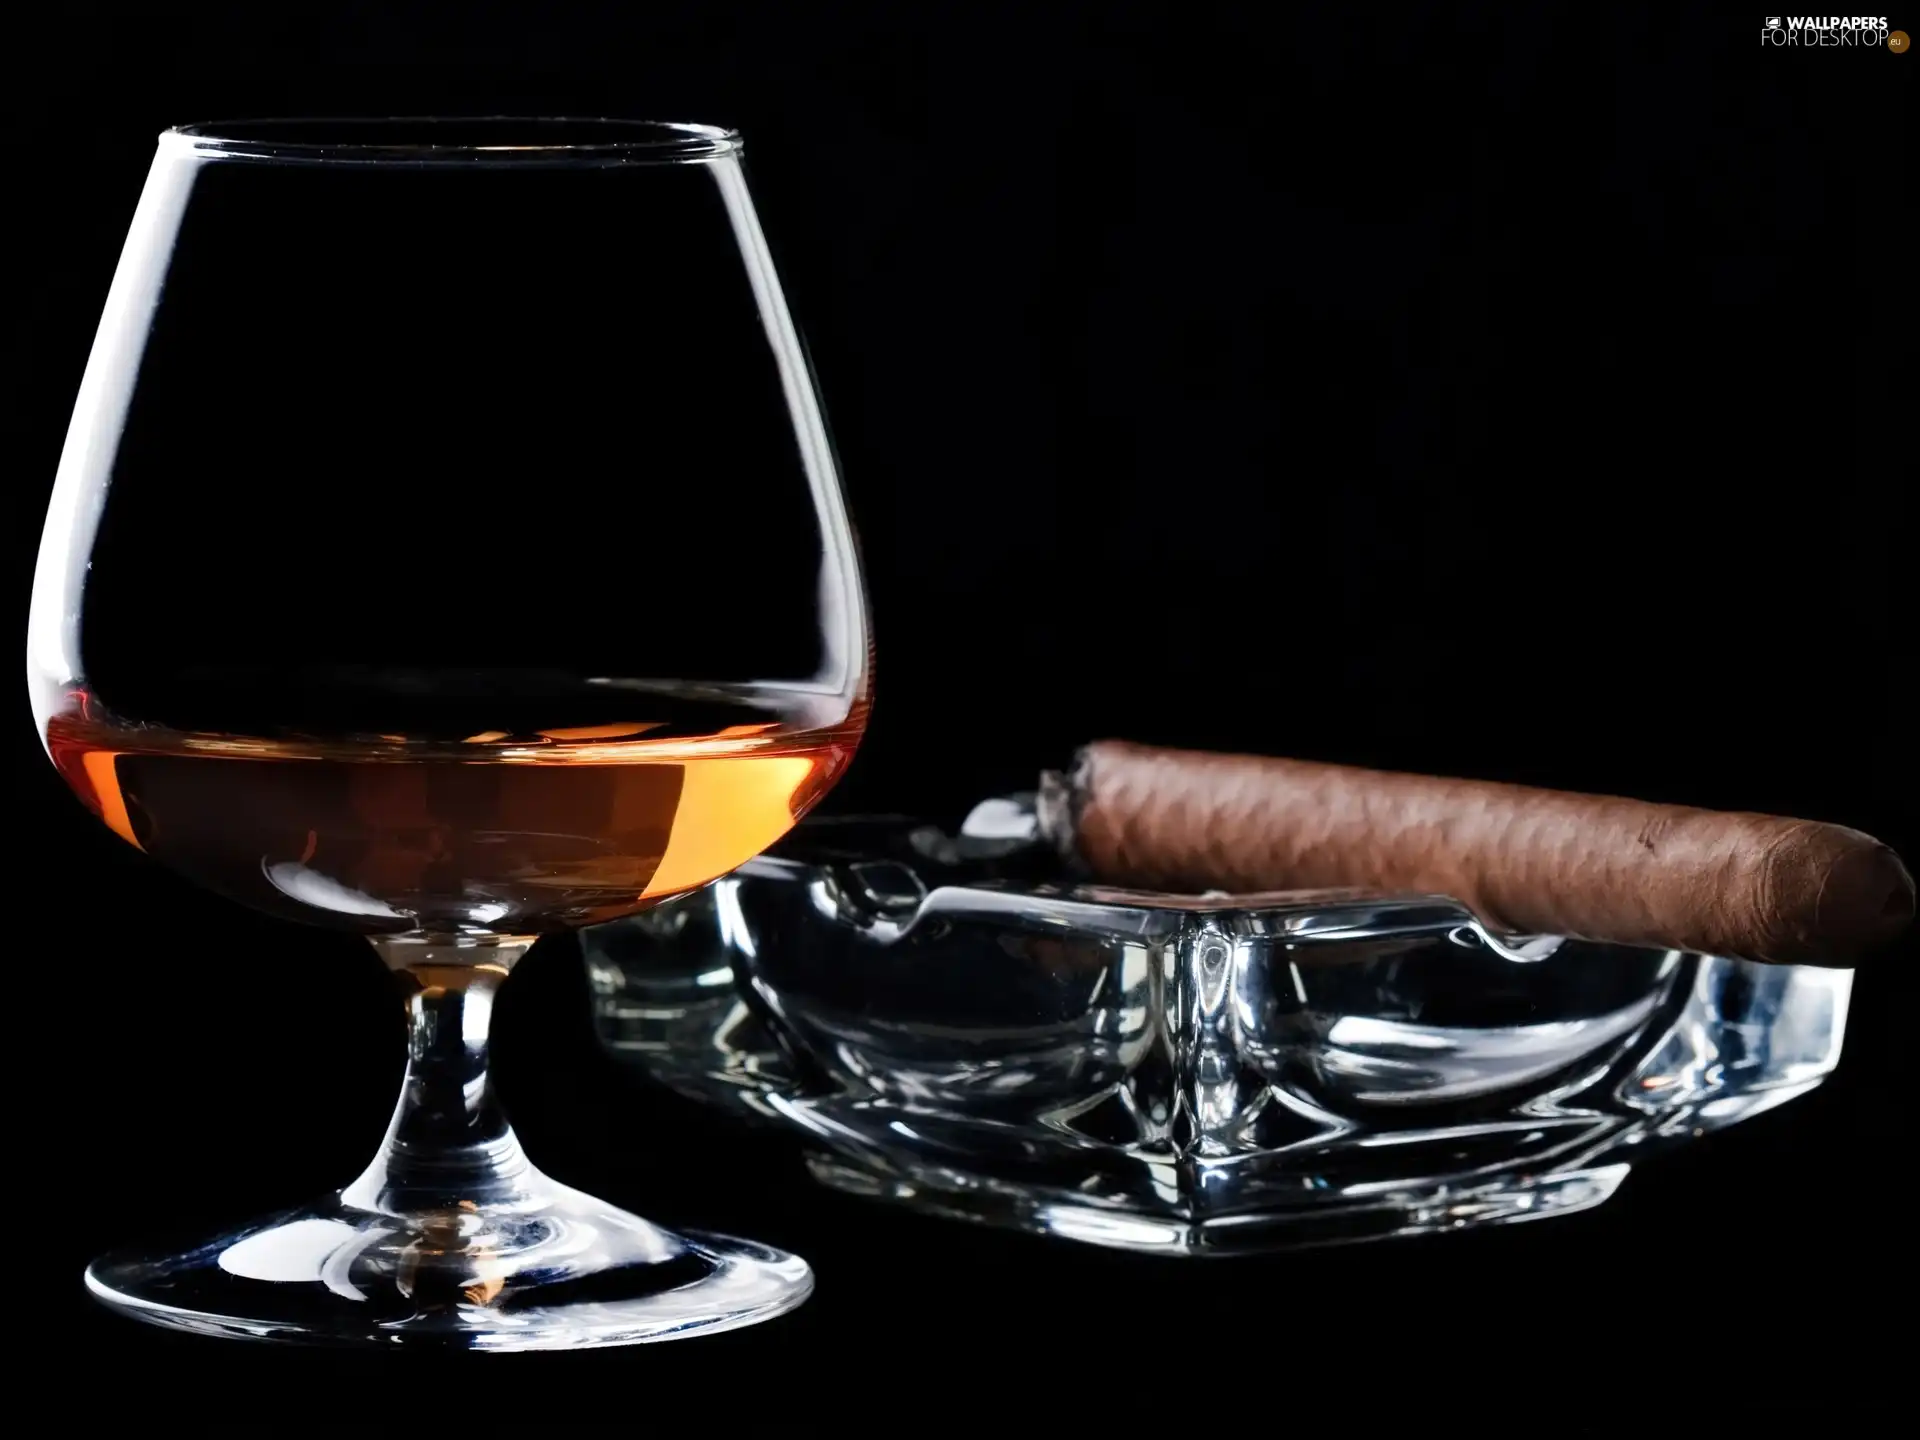 glass, cigar, ashtray, cognac